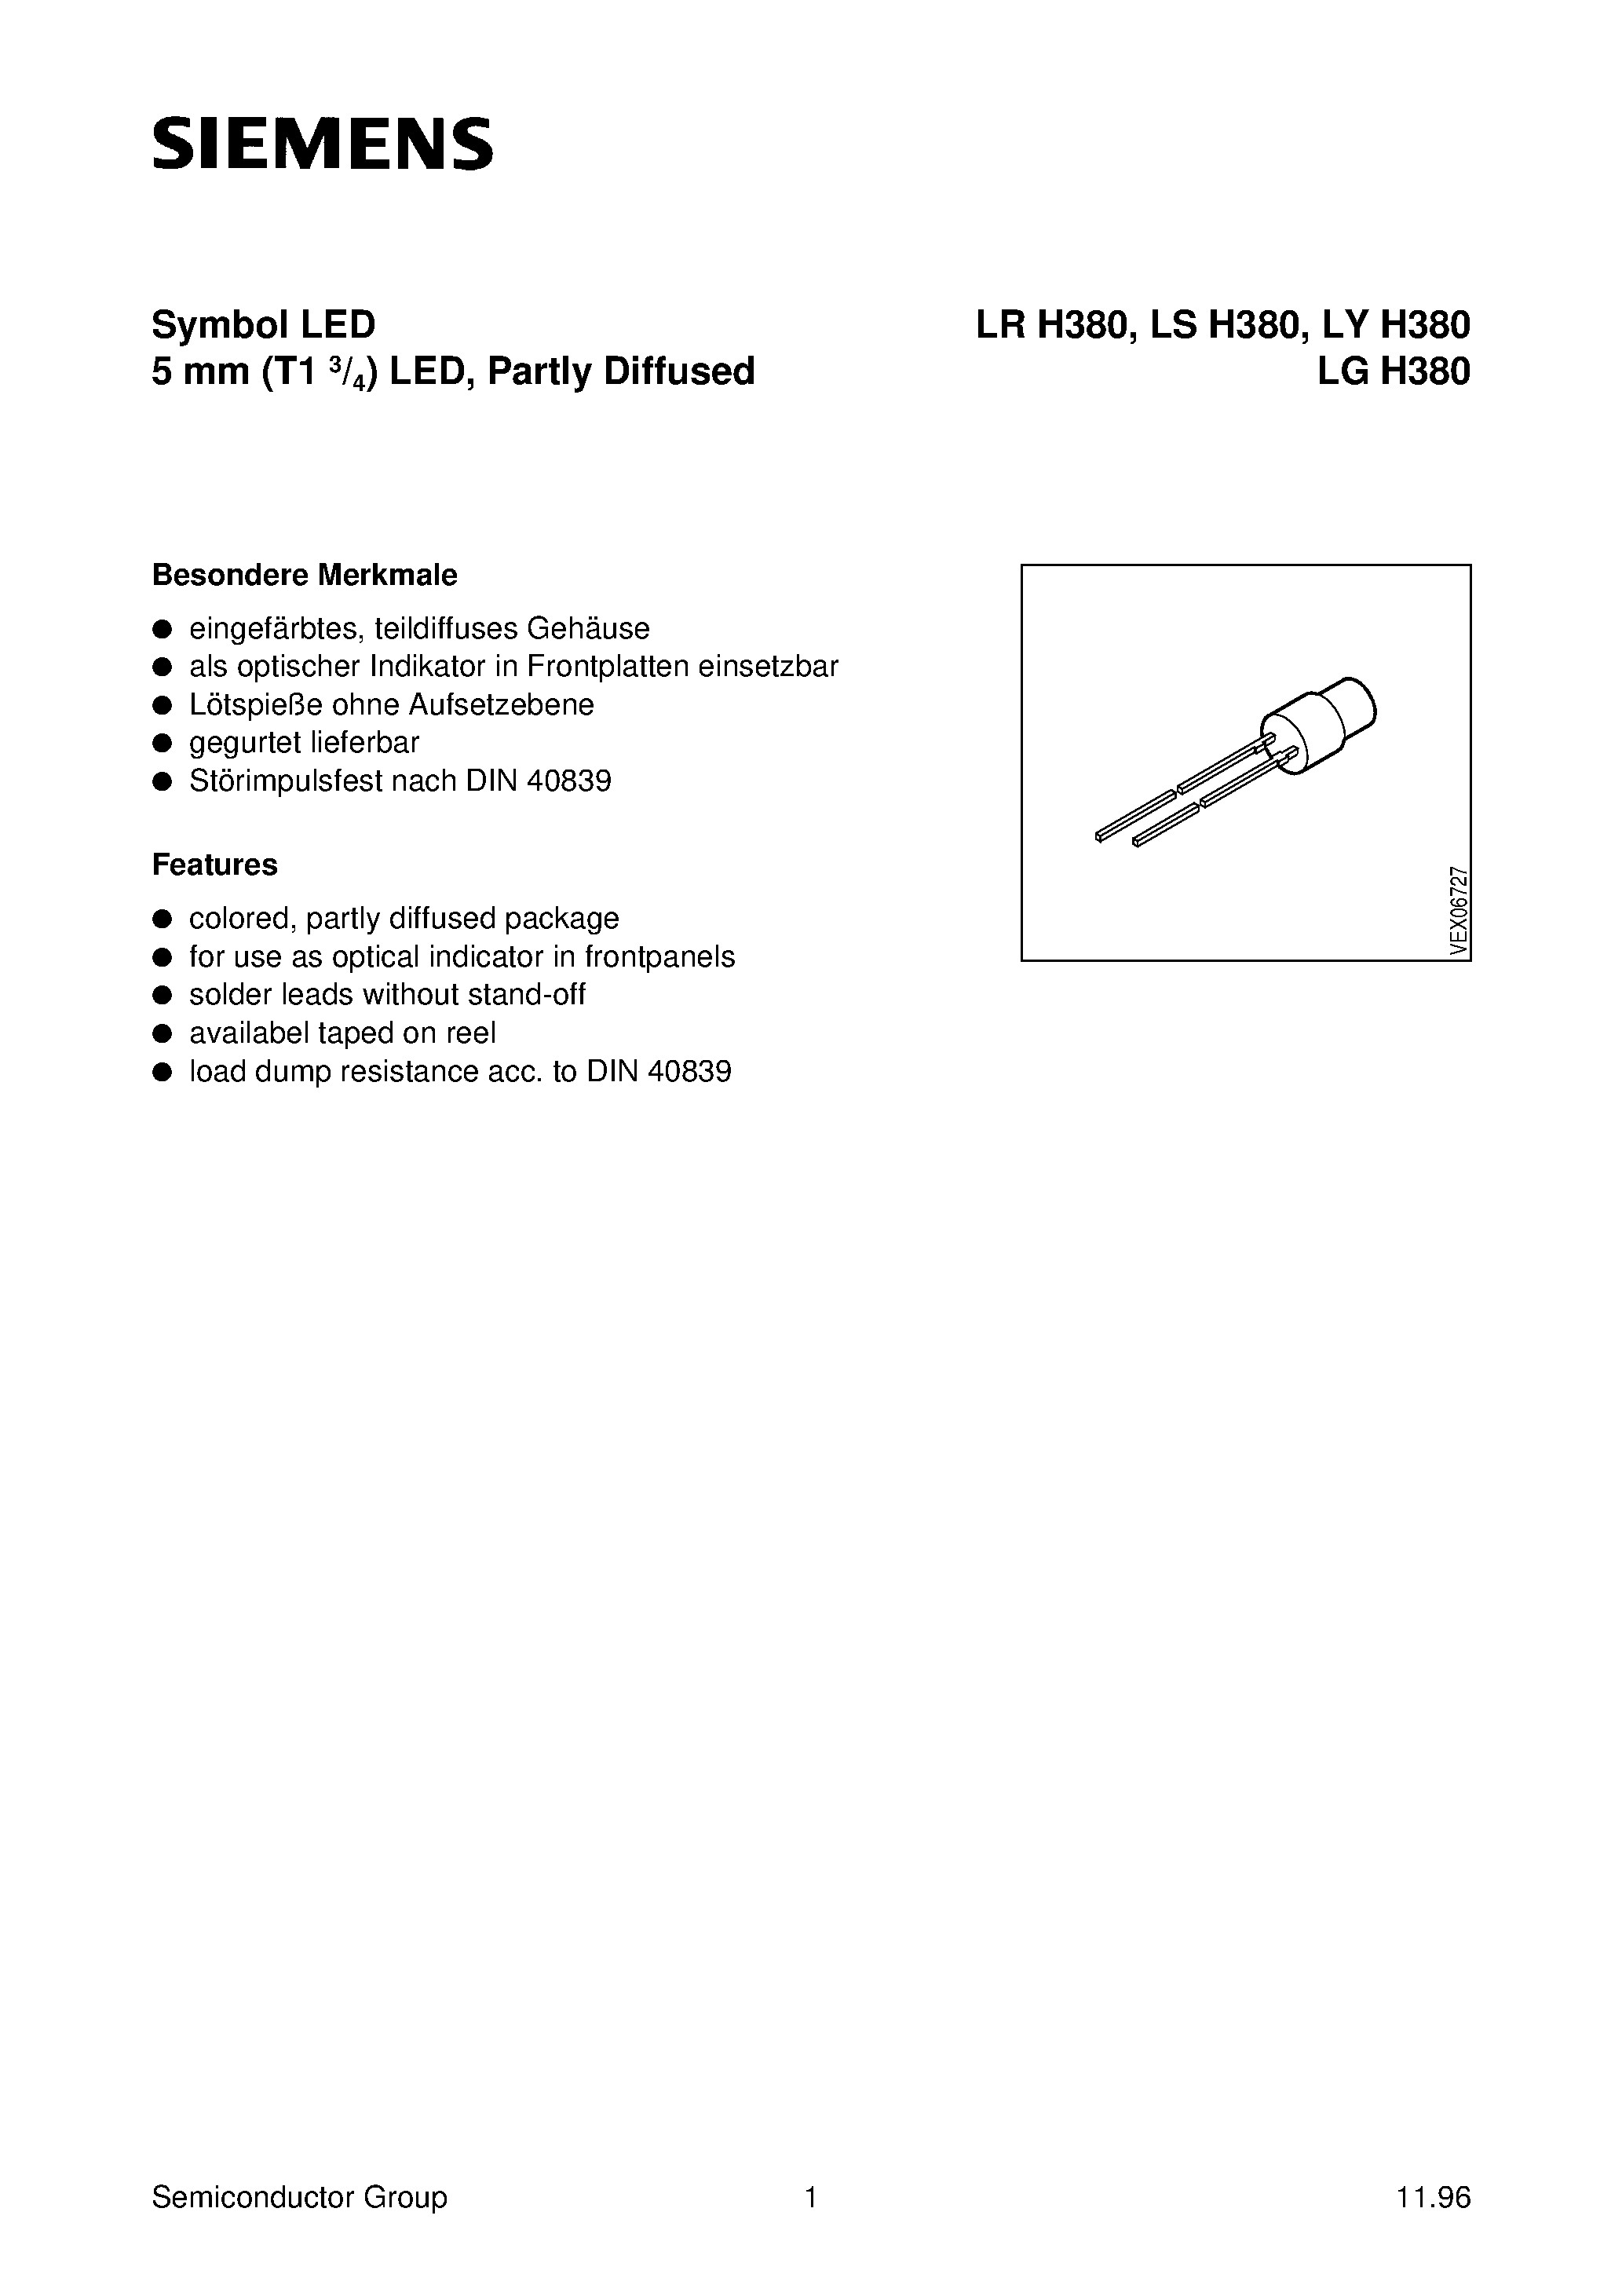 Datasheet LRH380-CE - Symbol LED 5 mm T1 3/4 LED / Partly Diffused page 1